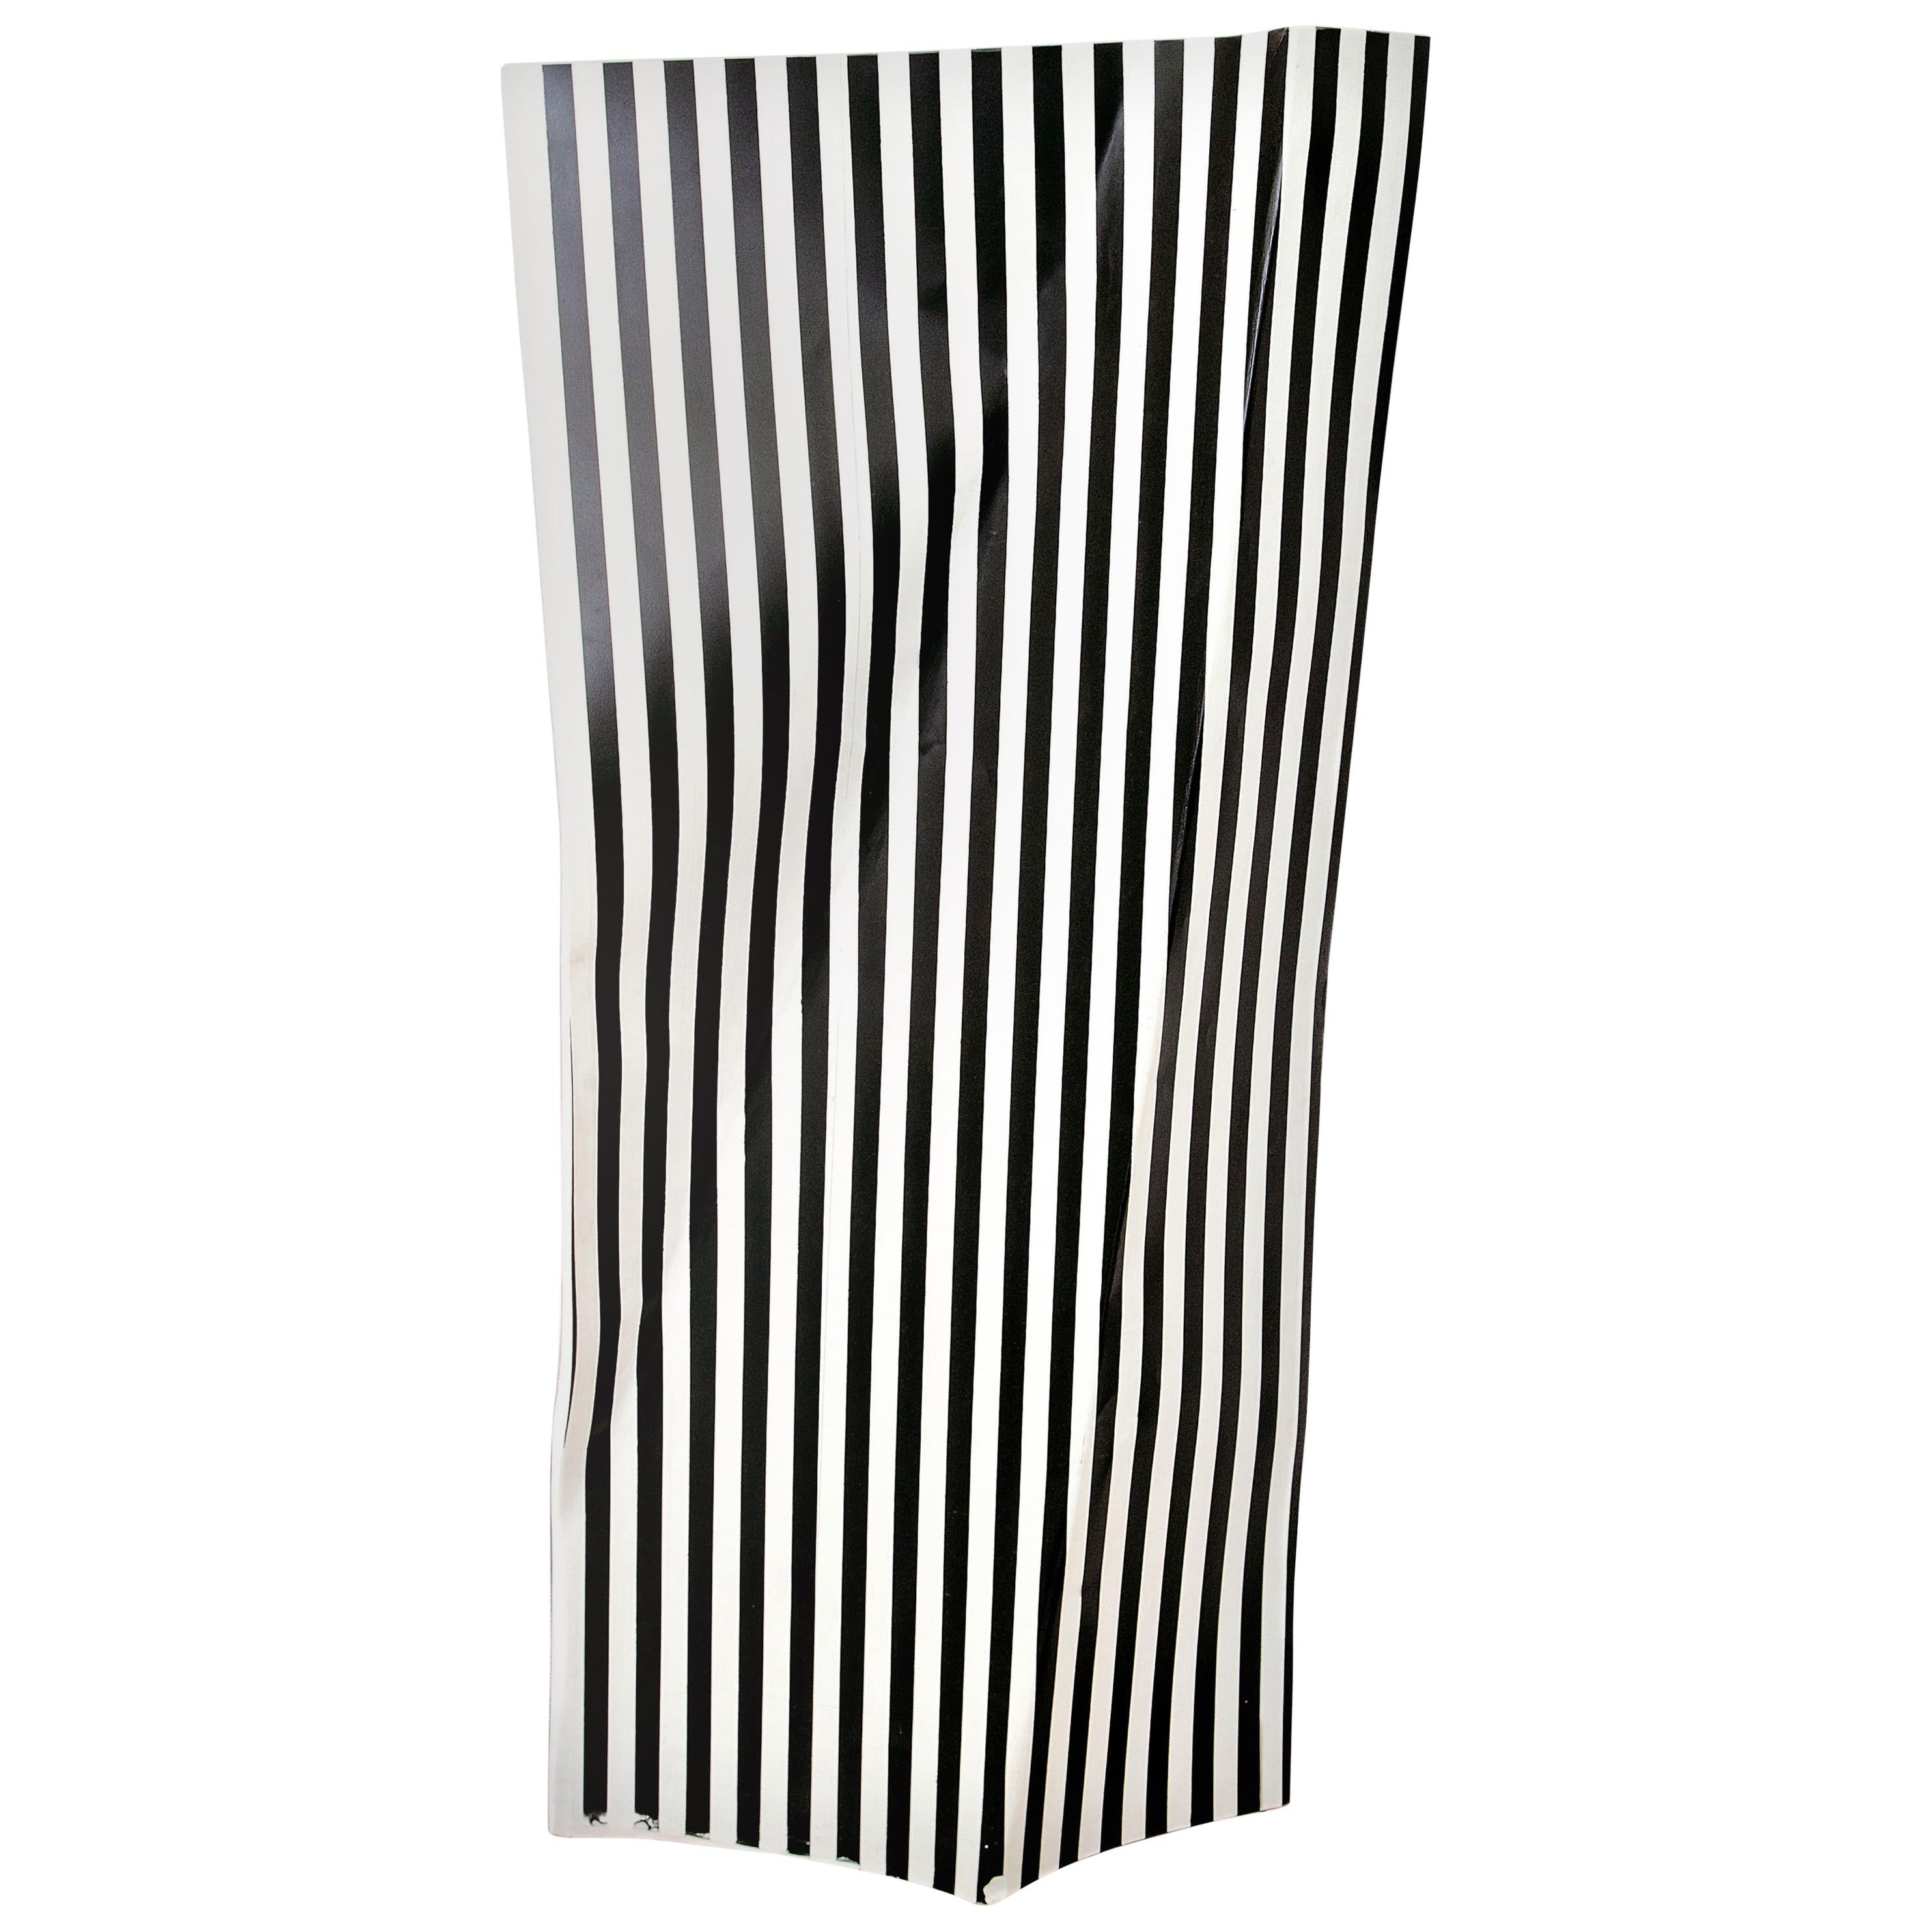 Pennacchio Argentato "Stripes #2" For Sale